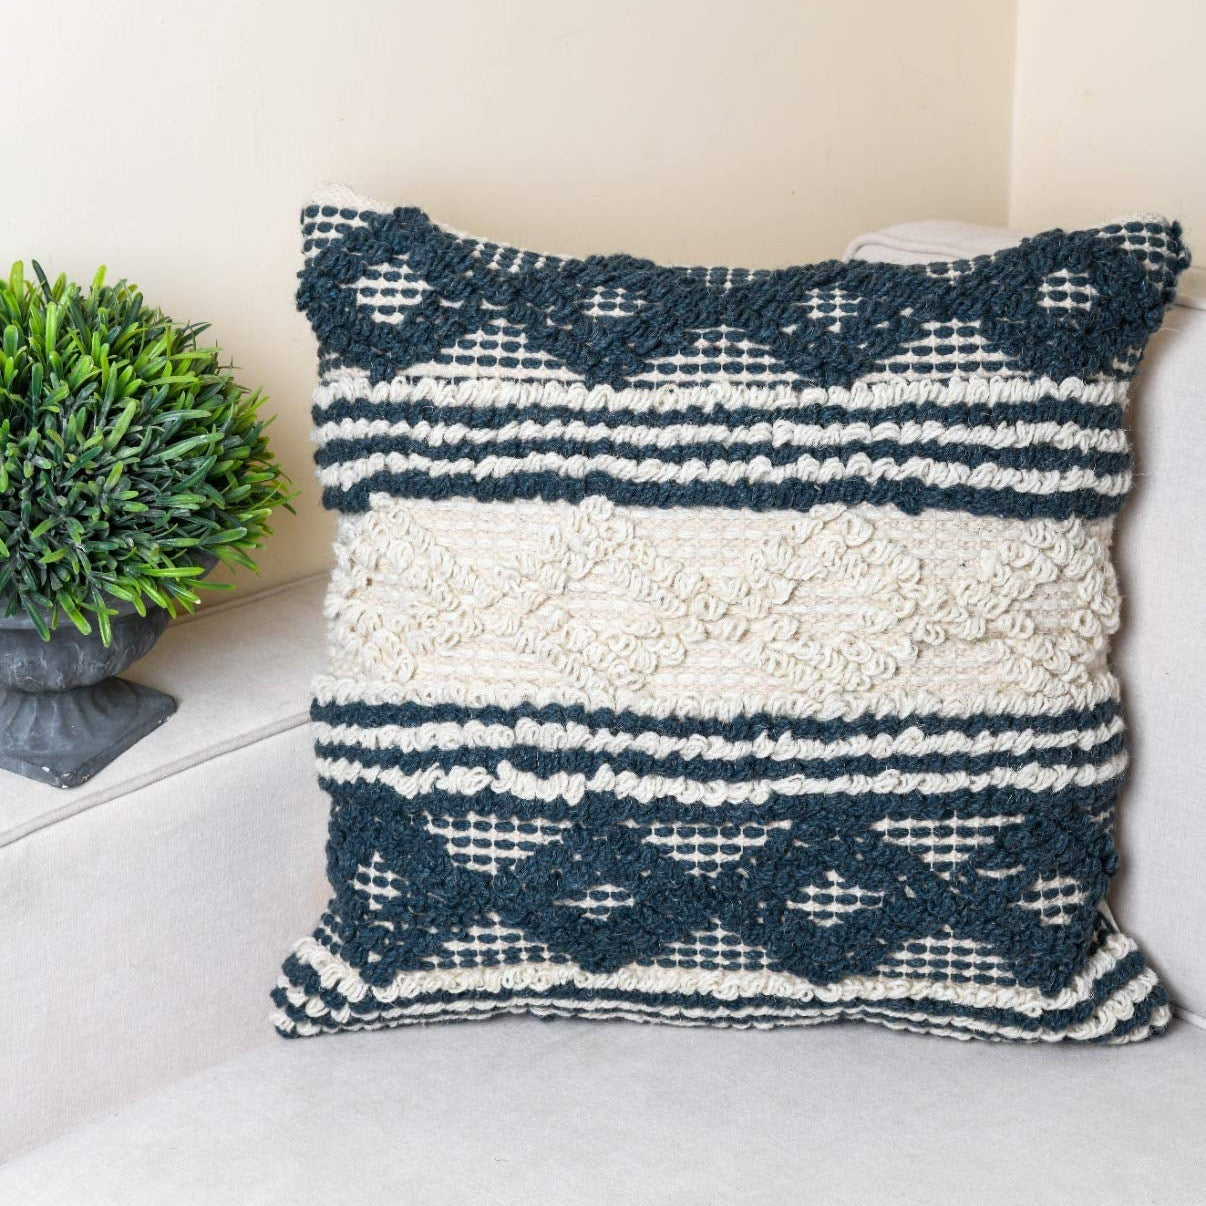 'Moroccan Magic' Hand-Woven Cotton Wool Cushion Cover